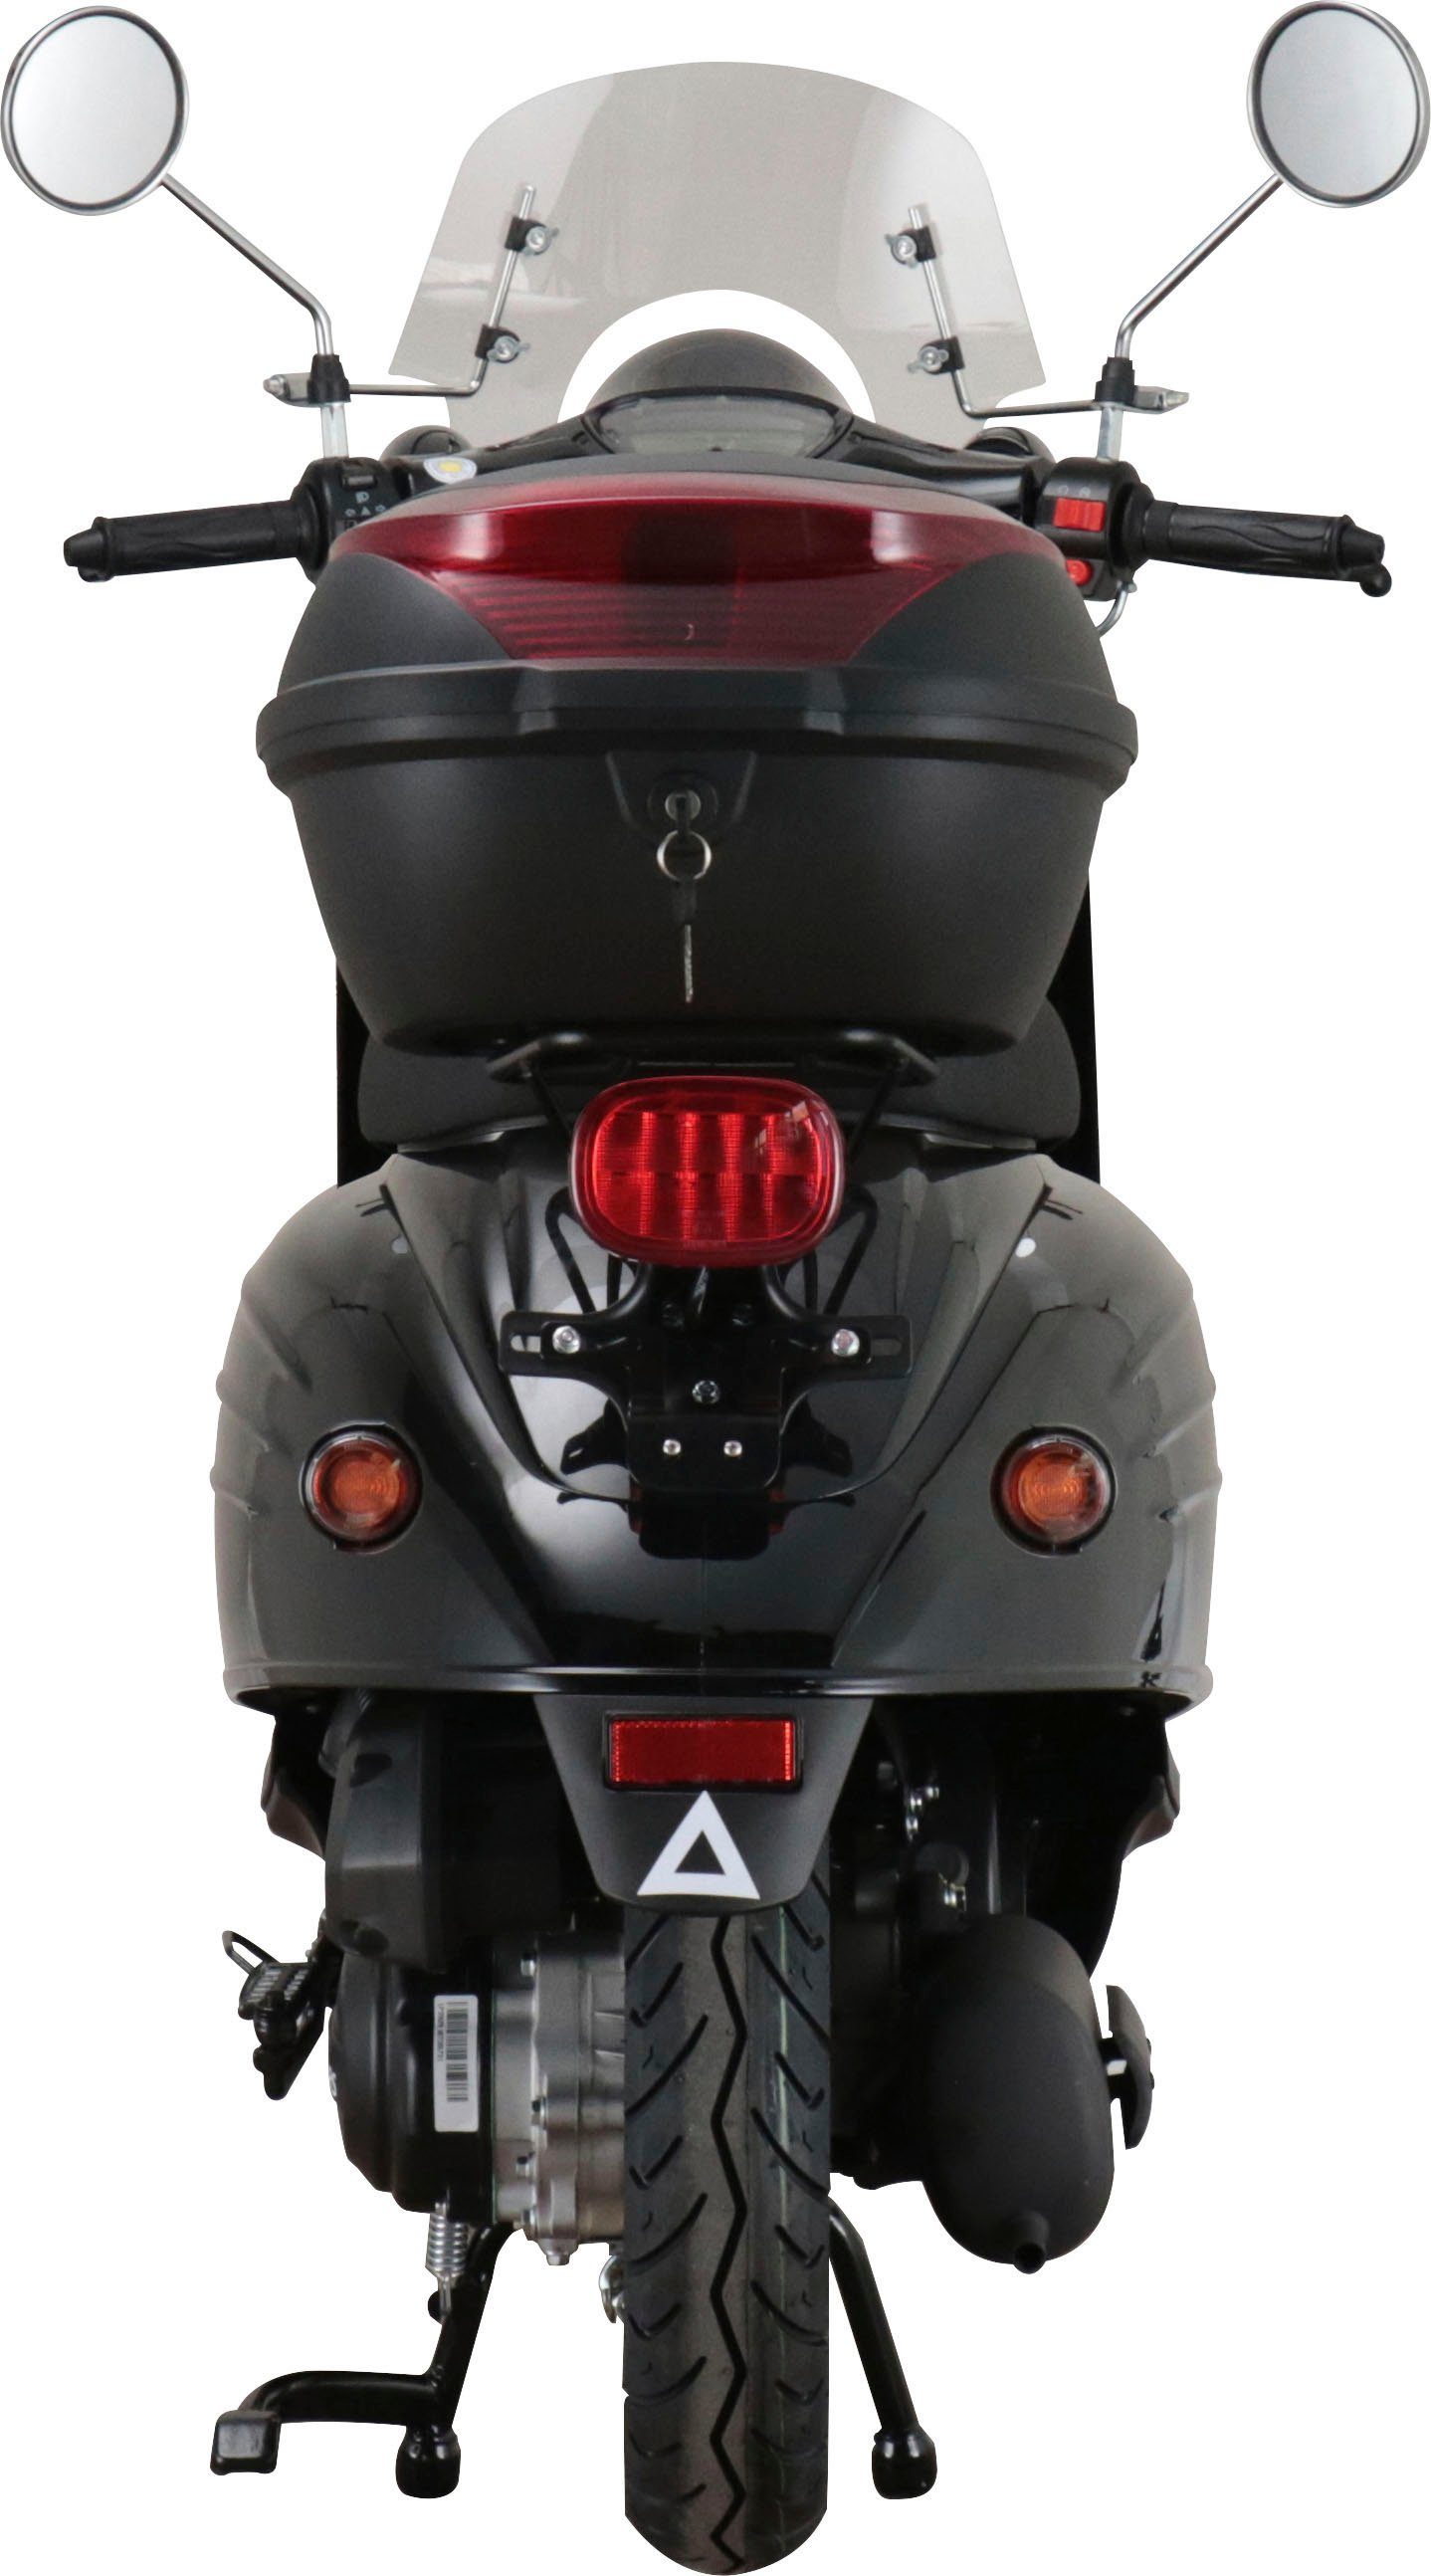 Alpha Motors Motorroller inkl. km/h, ccm, 45 50 und Adria, Topcase Euro 5, Windschild